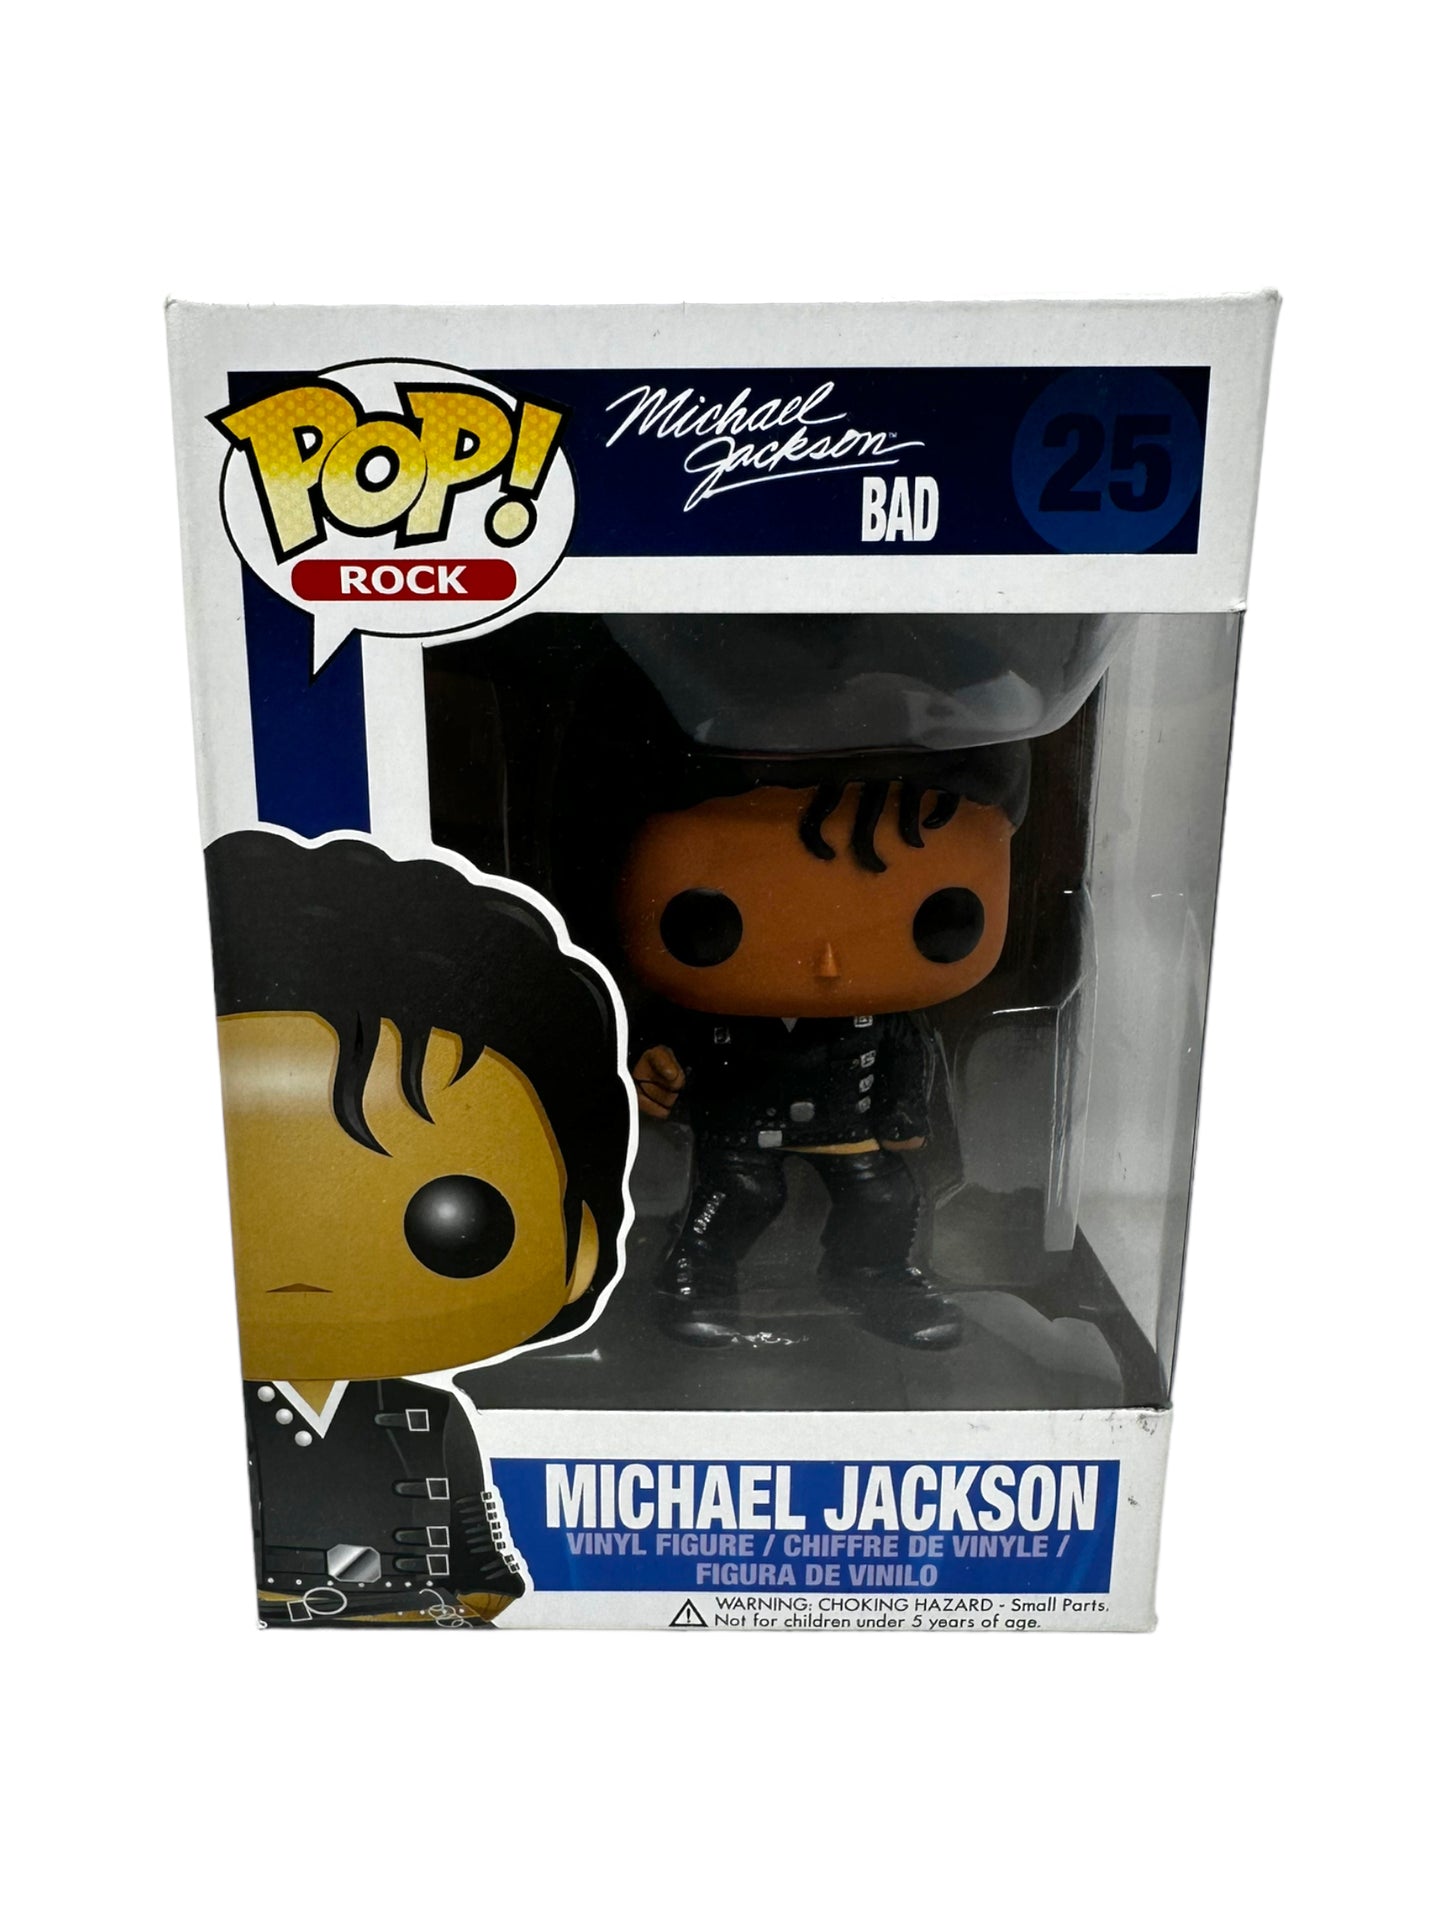 Sold 9/25 2013 Michael Jackson 25 (Bad)